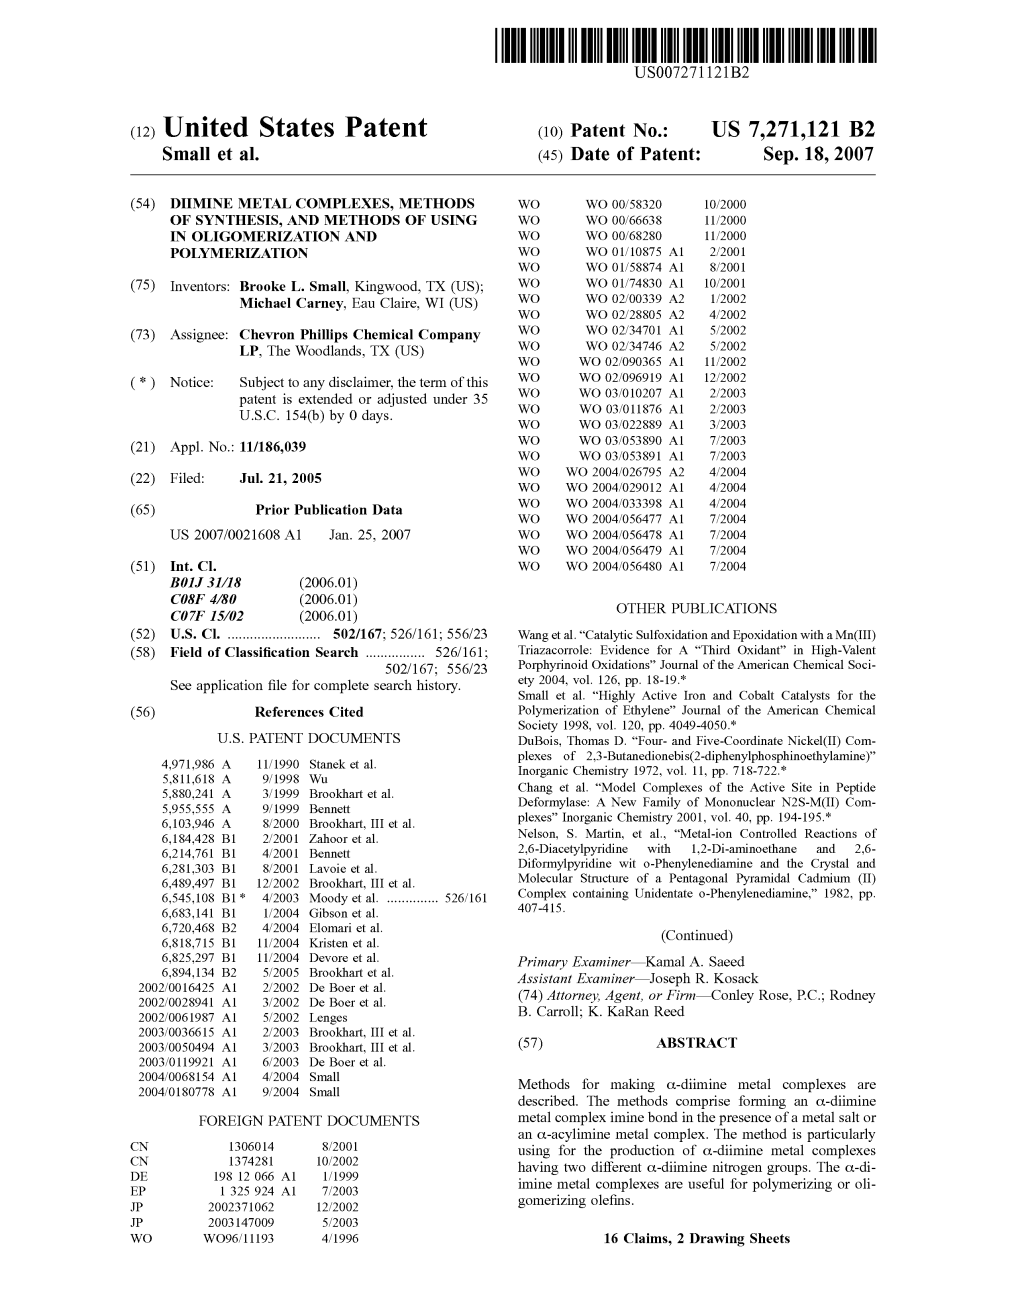 (12) United States Patent (10) Patent No.: US 7,271,121 B2 Small Et Al